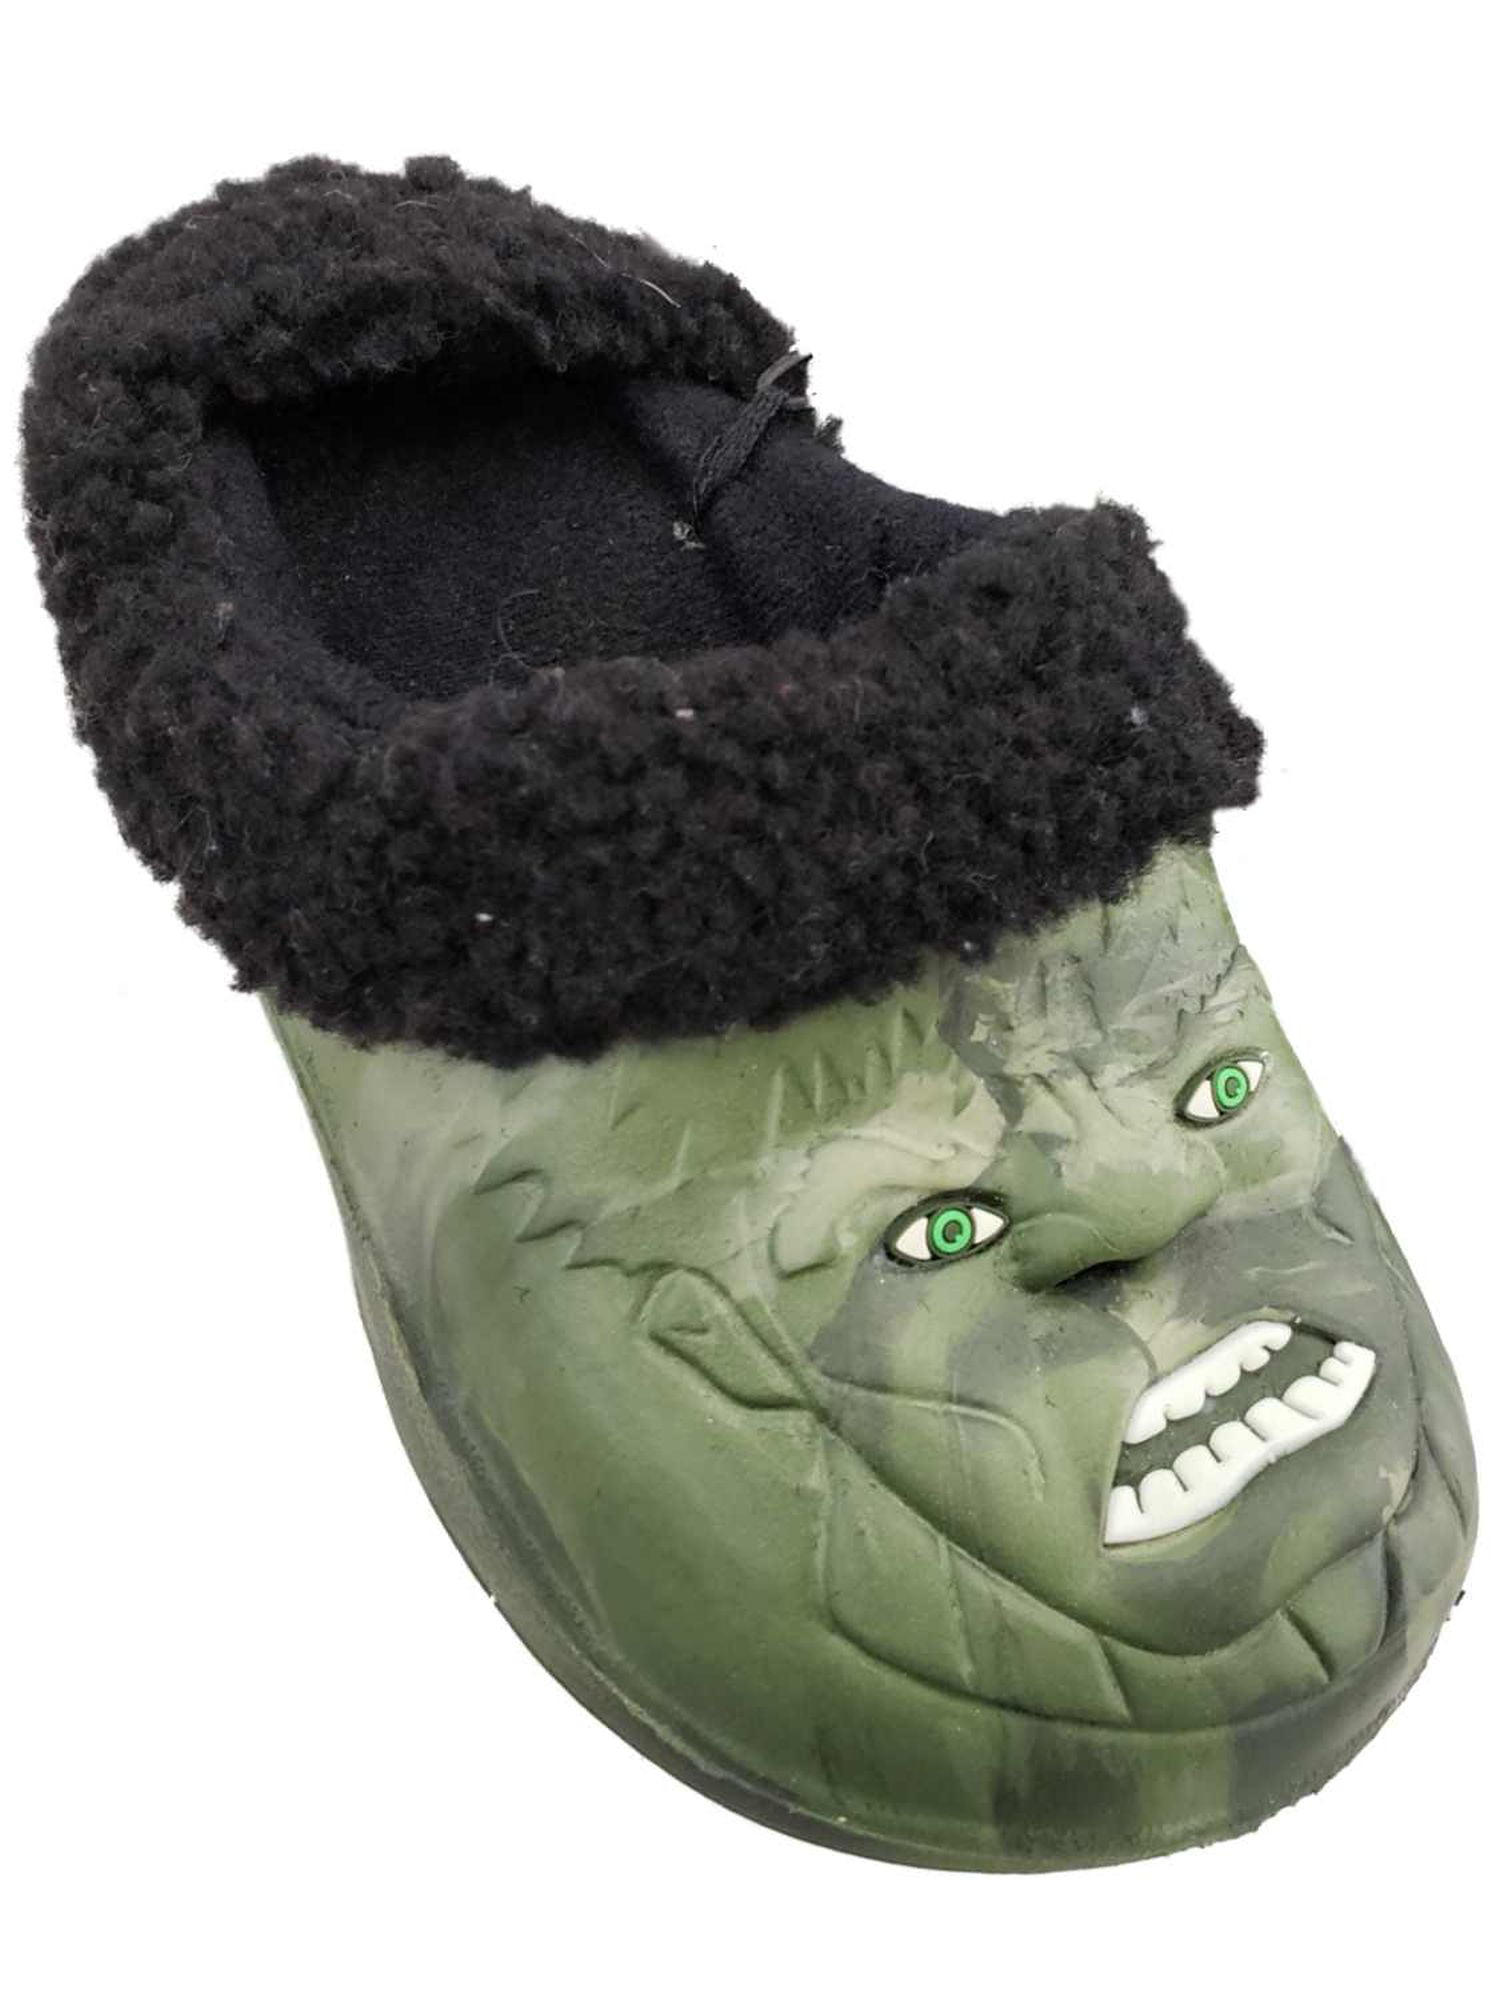 hulk shoes walmart